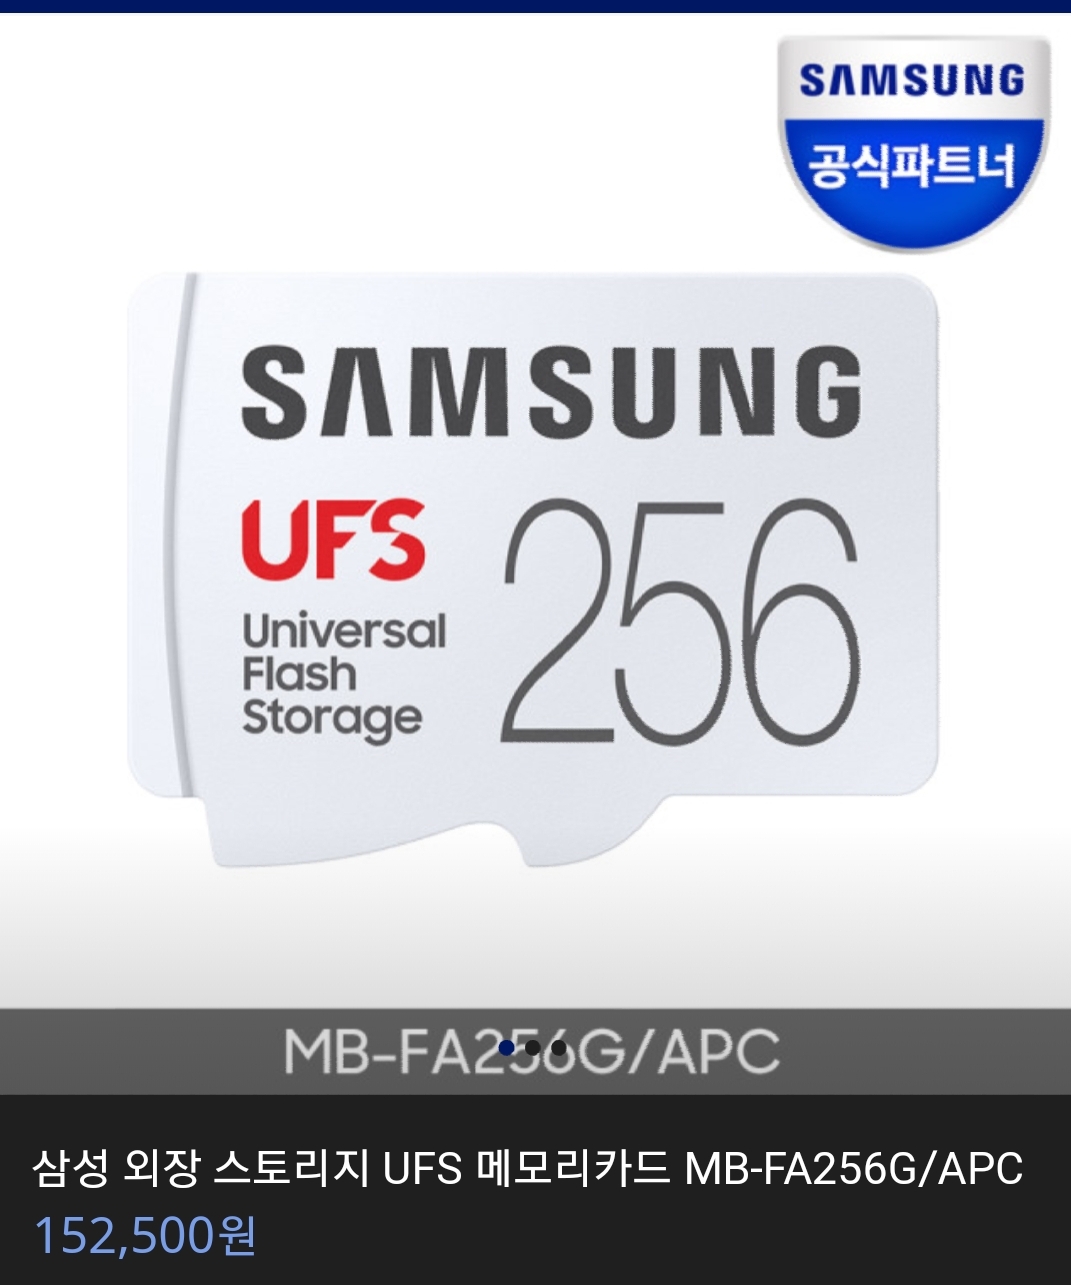 SmartSelect_20190214-225109_Samsung Internet Beta.jpg